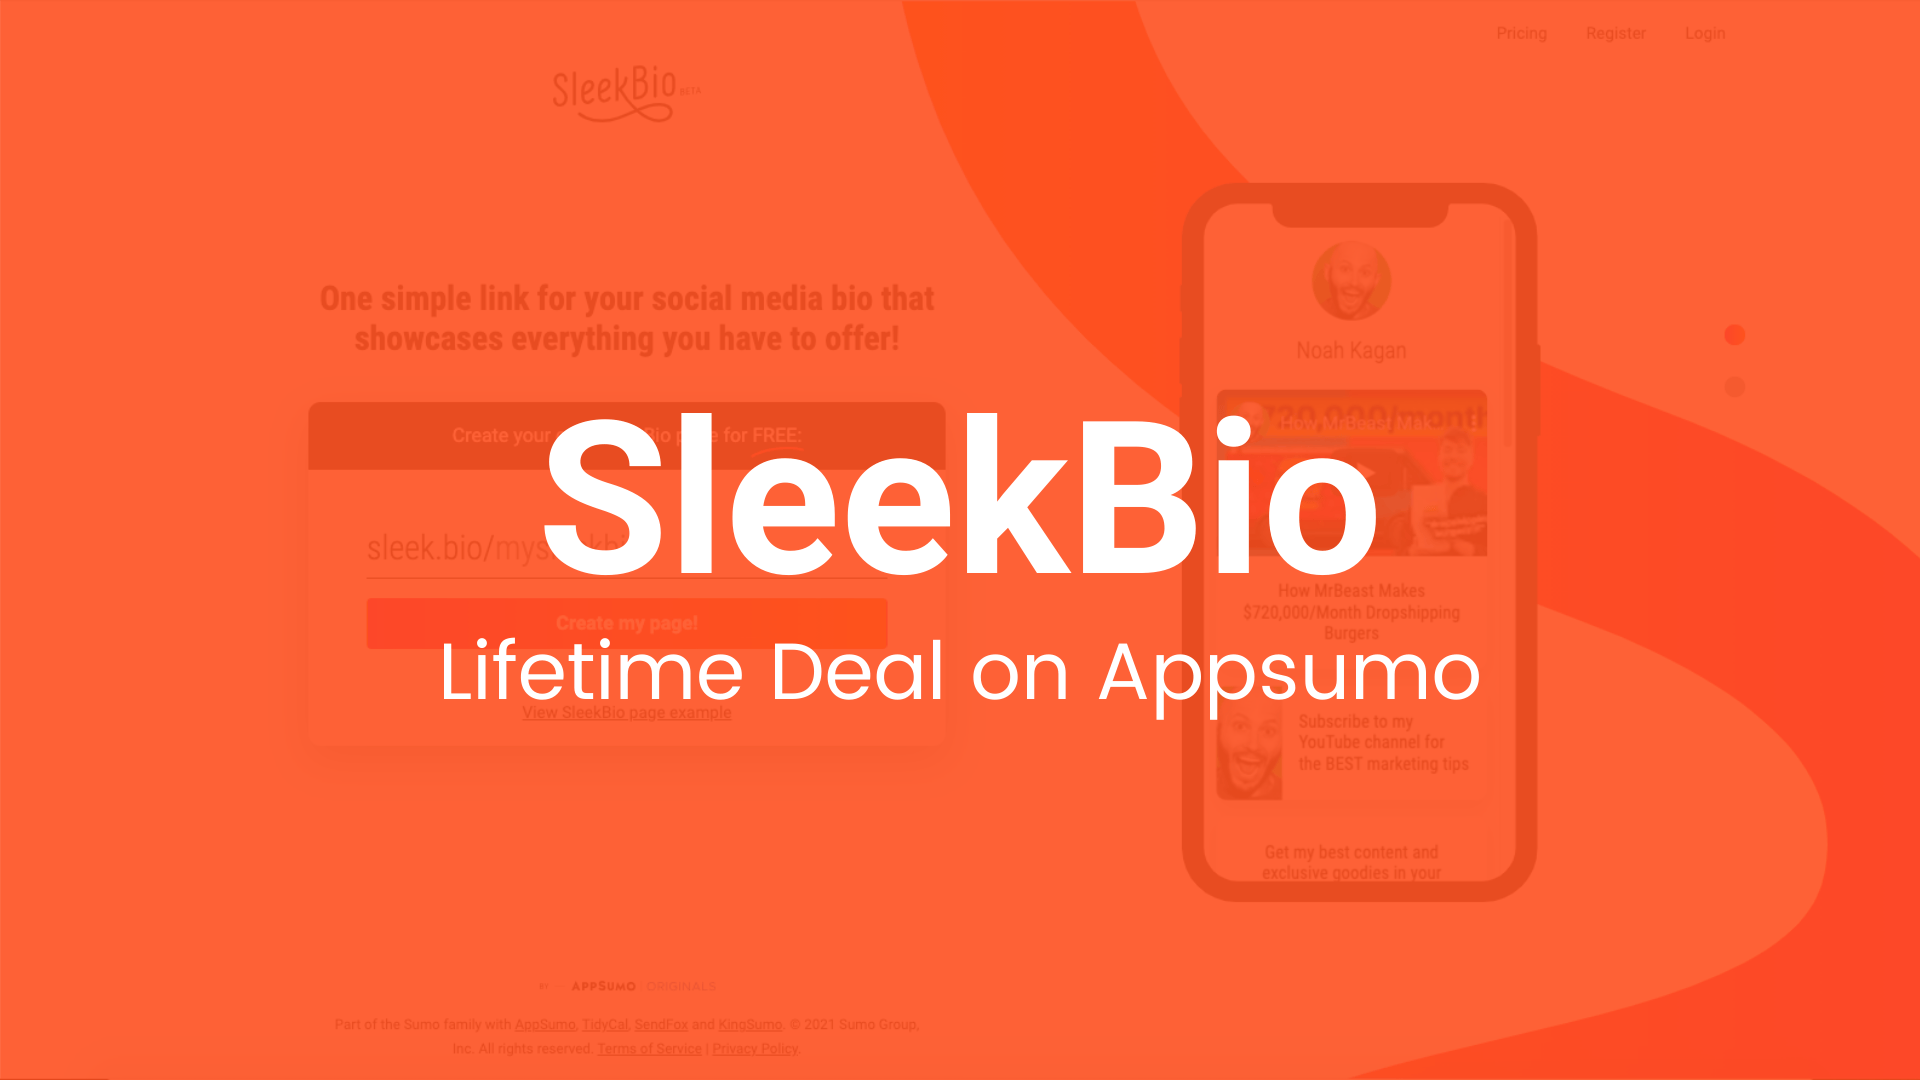 SleekBio: Creating Social Media Bio to Showcase Every Asset